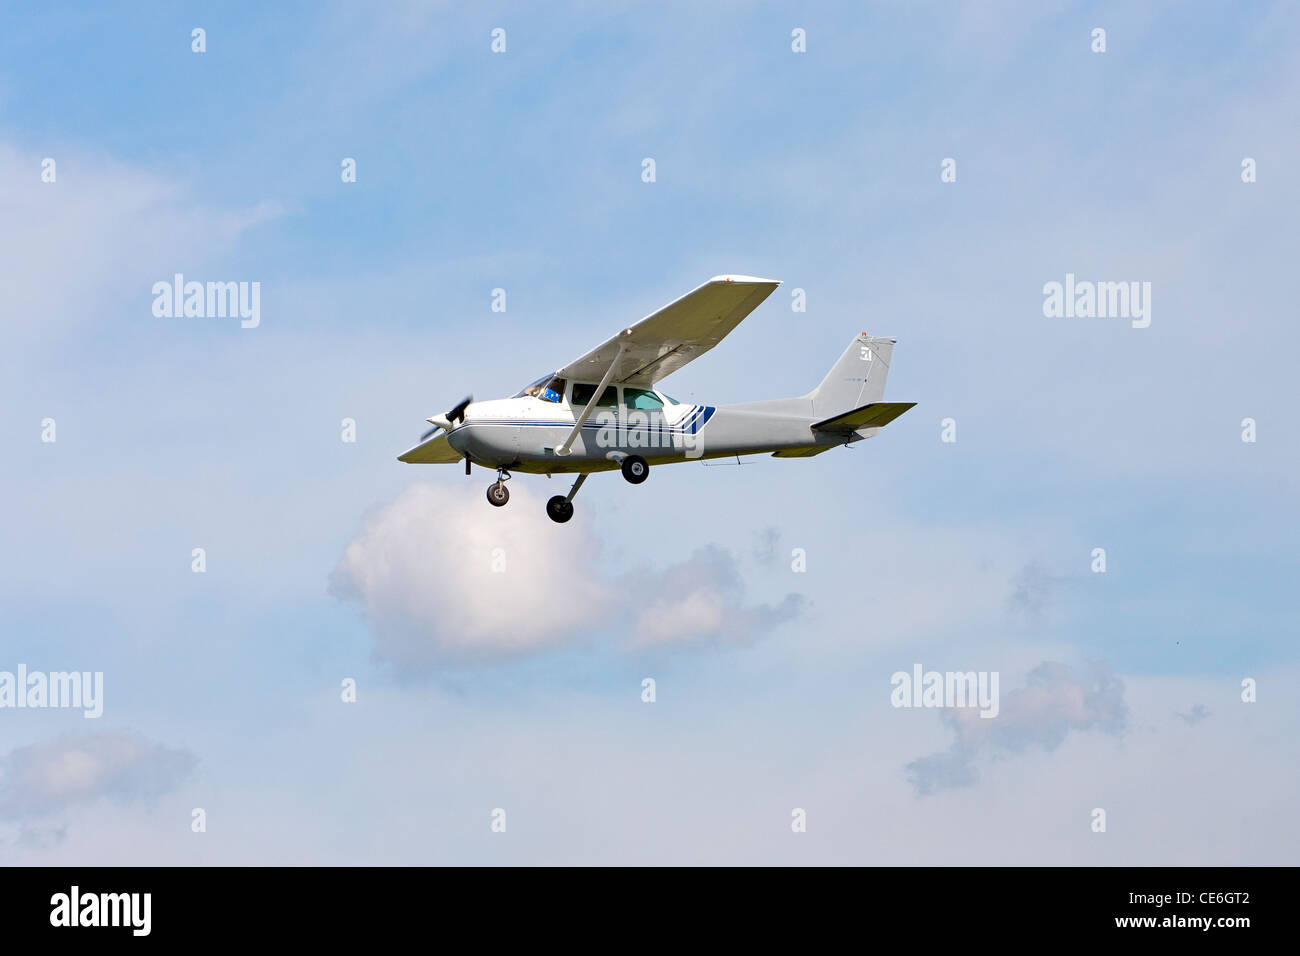 A Cessna plane in flight in the sky. Stock Photo